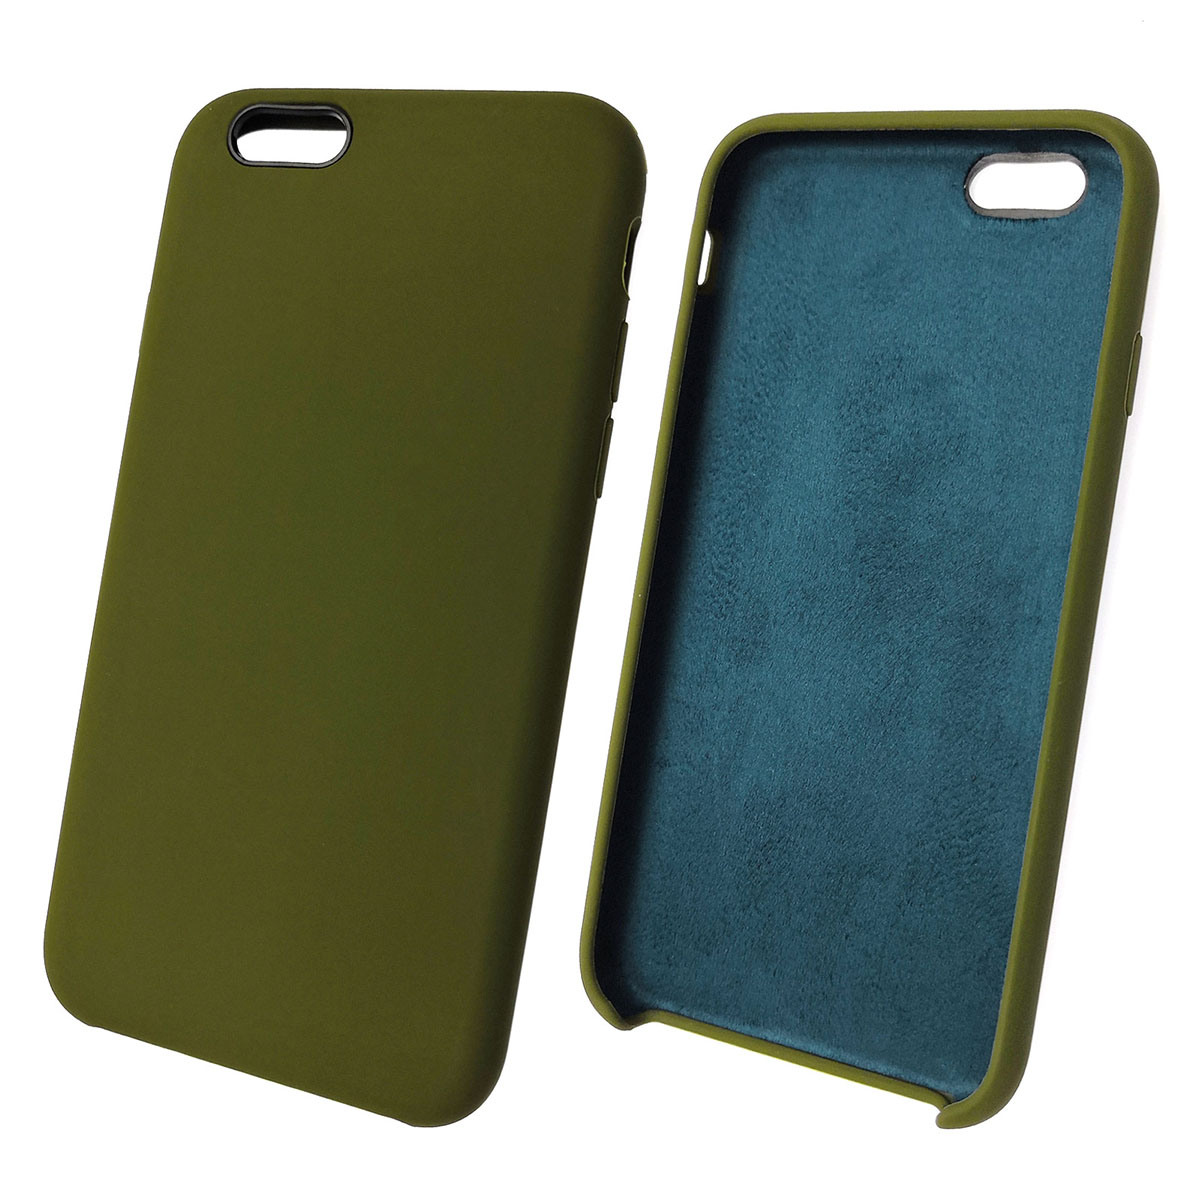 Чехол накладка Silicon Case для APPLE iPhone 6, 6G, 6S, силикон, бархат, цвет болотный.